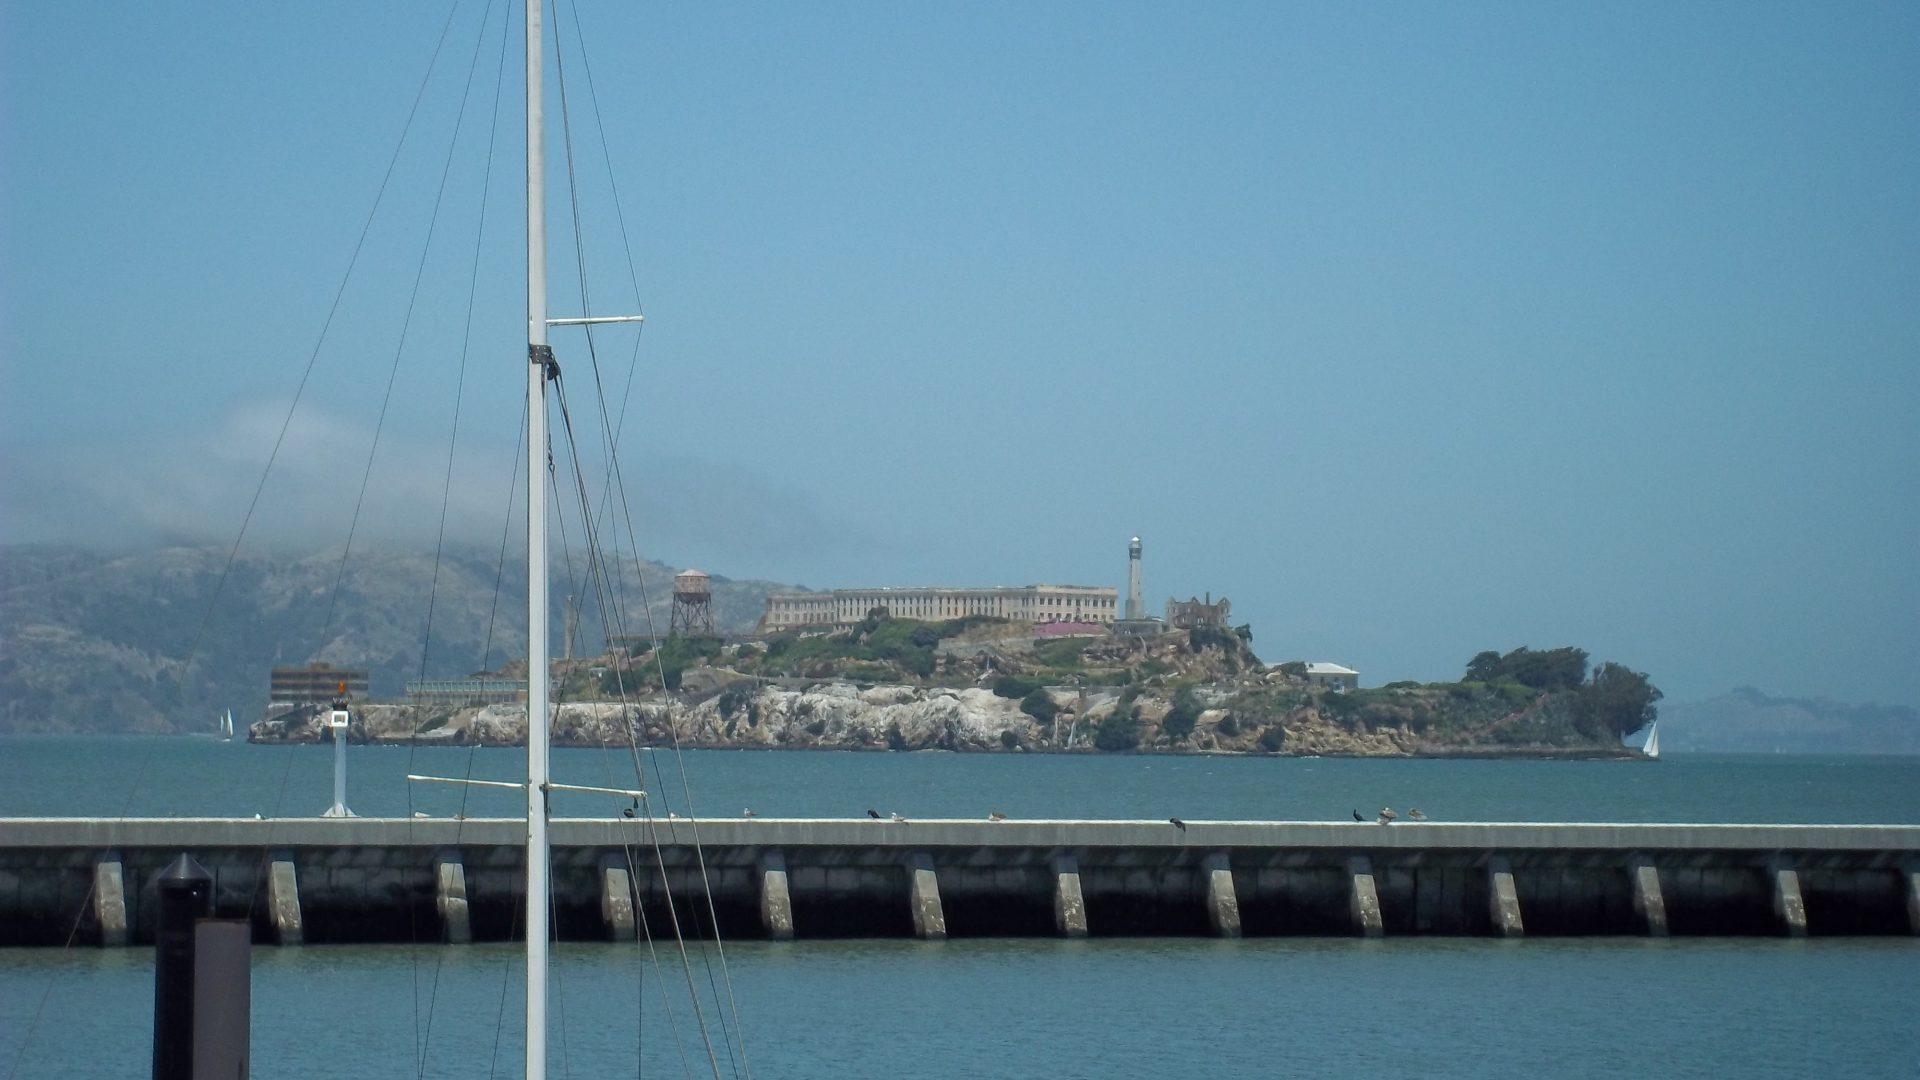 Alcatraz Tag wallpaper: Alcatraz Prison August Jail Bars Cell